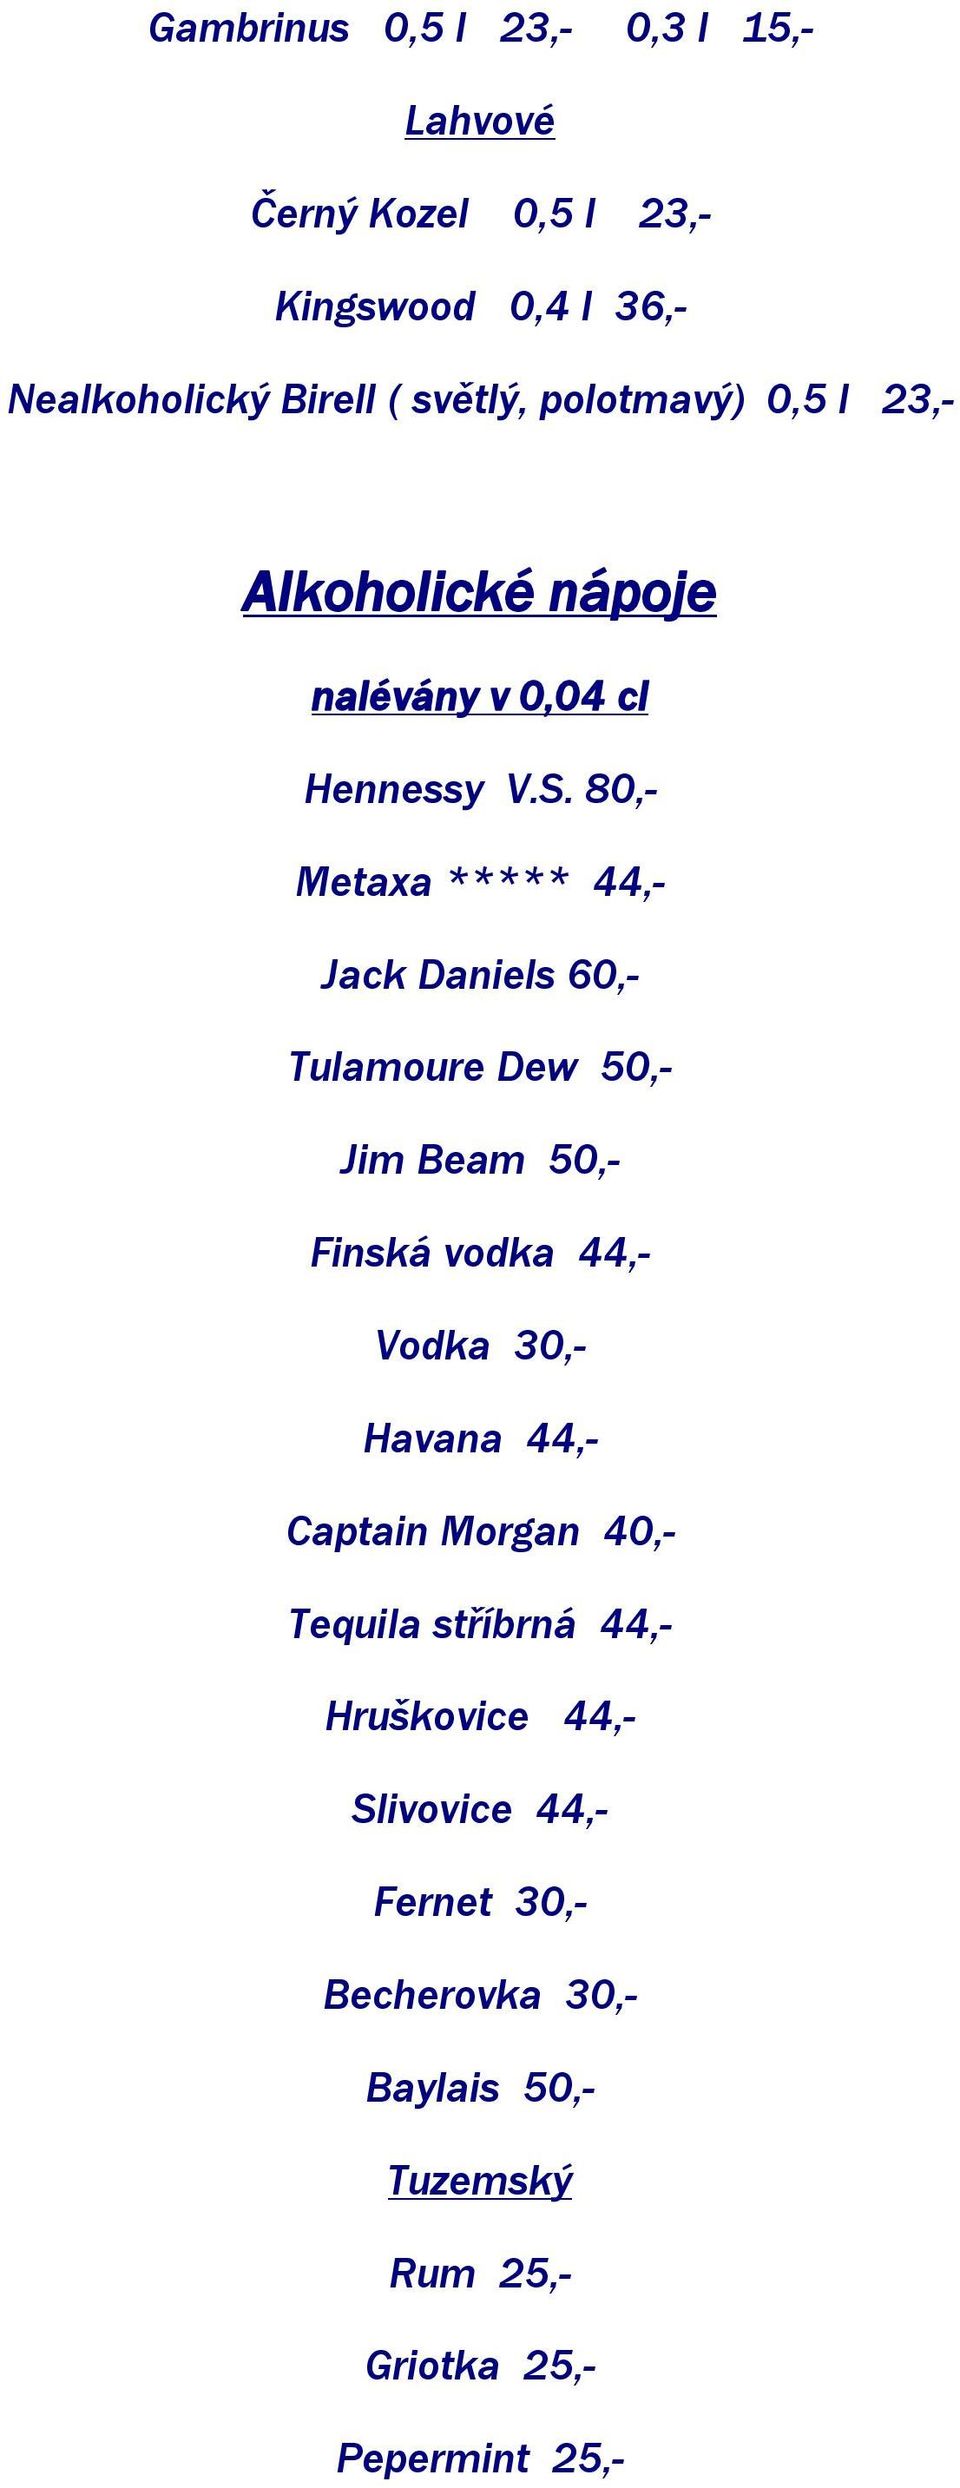 80,- Metaxa ***** 44,- Jack Daniels 60,- Tulamoure Dew 50,- Jim Beam 50,- Finská vodka 44,- Vodka 30,- Havana 44,-